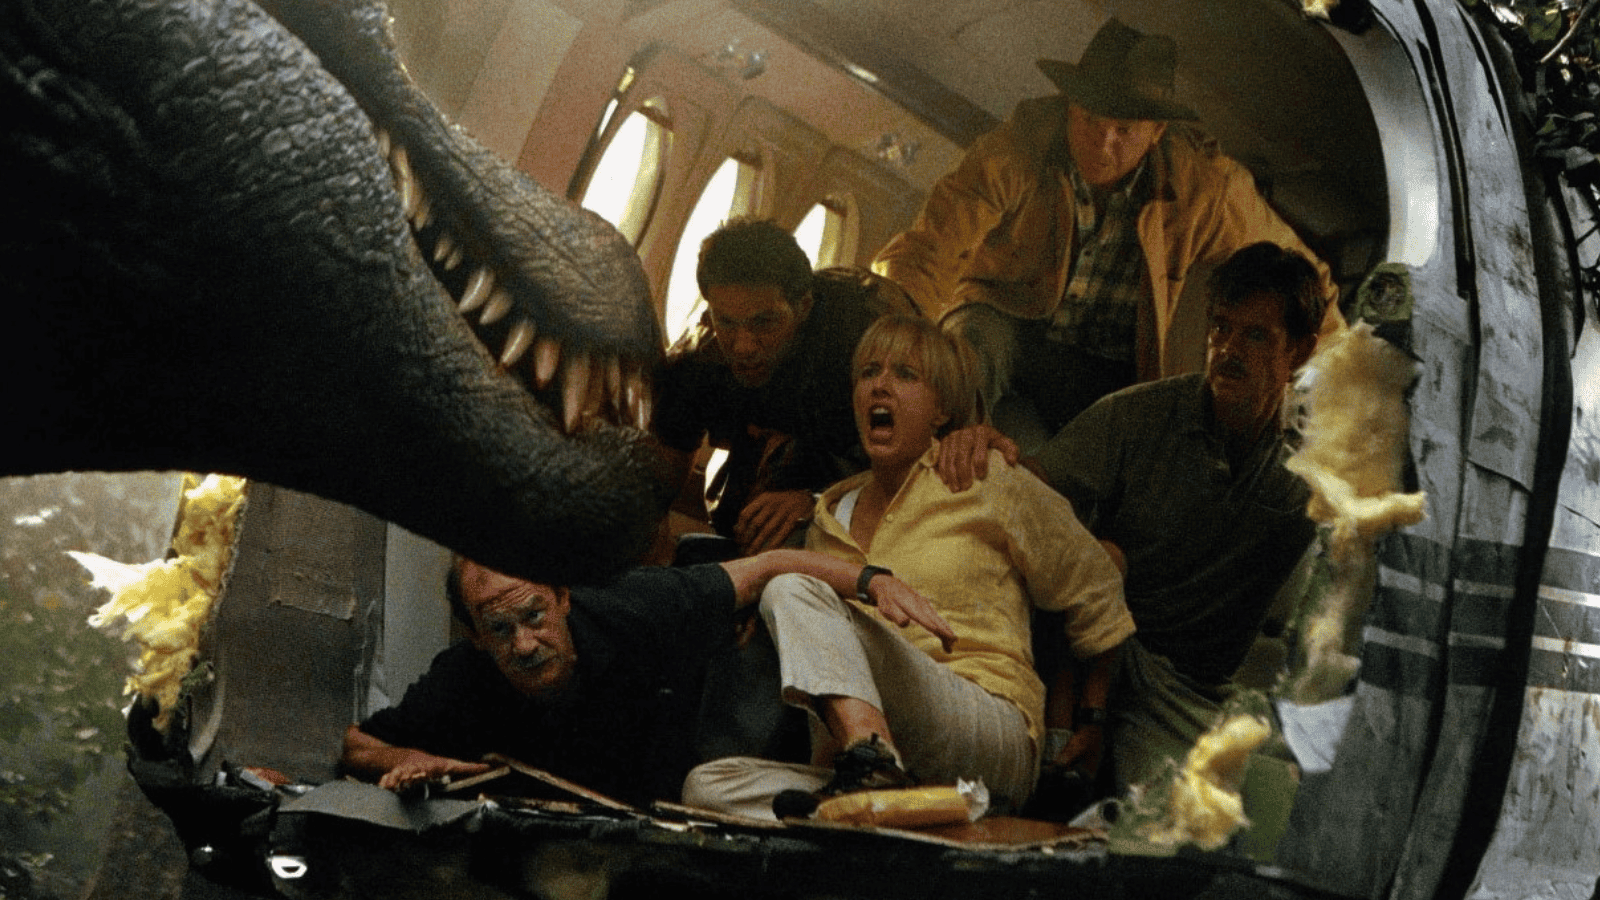 Scene from Jurassic Park III